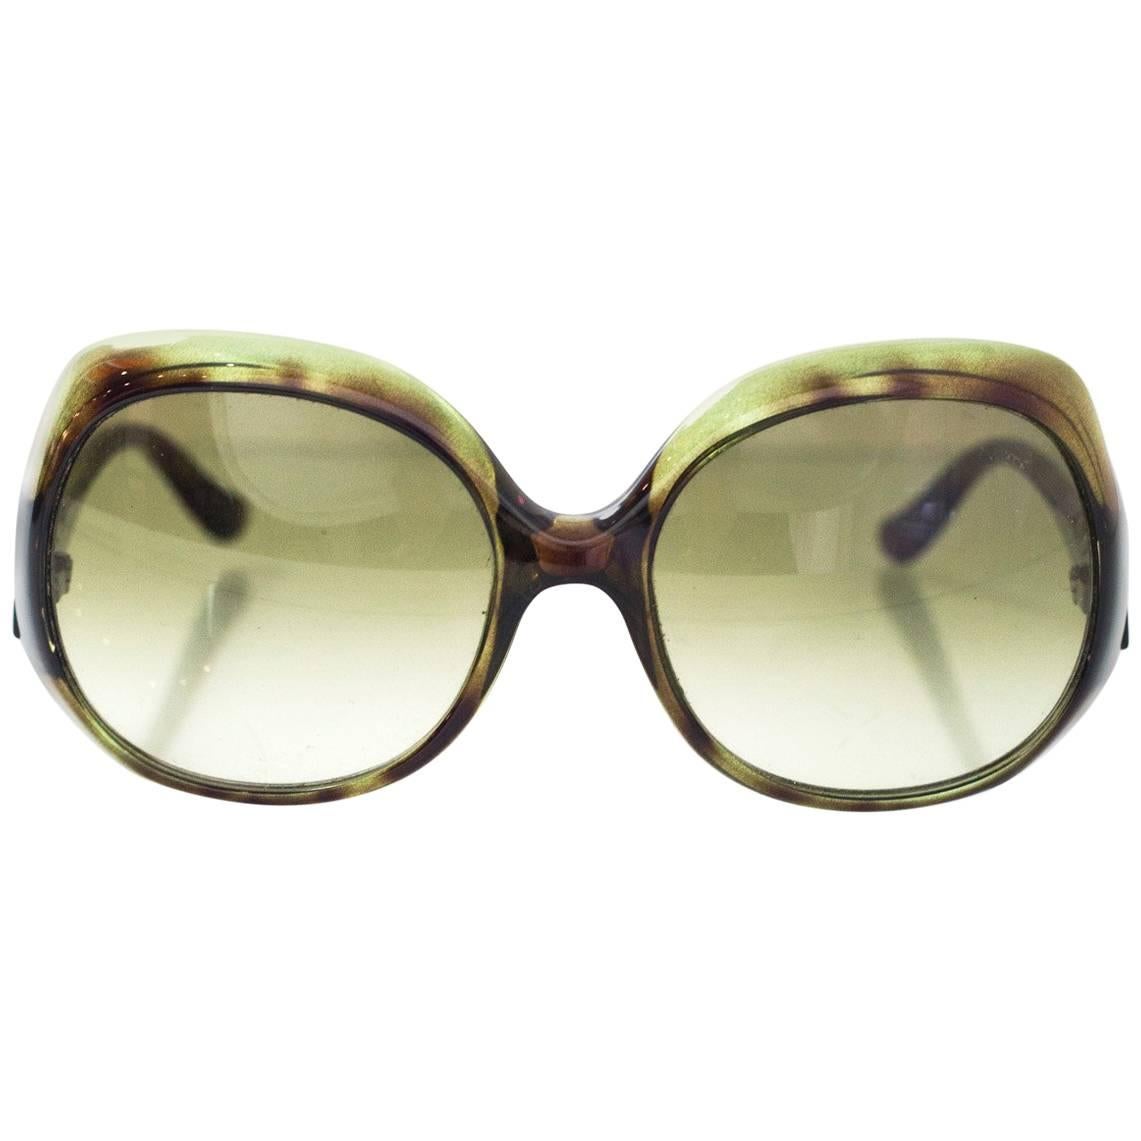 Fendi Green Tortoise Sunglasses with Case